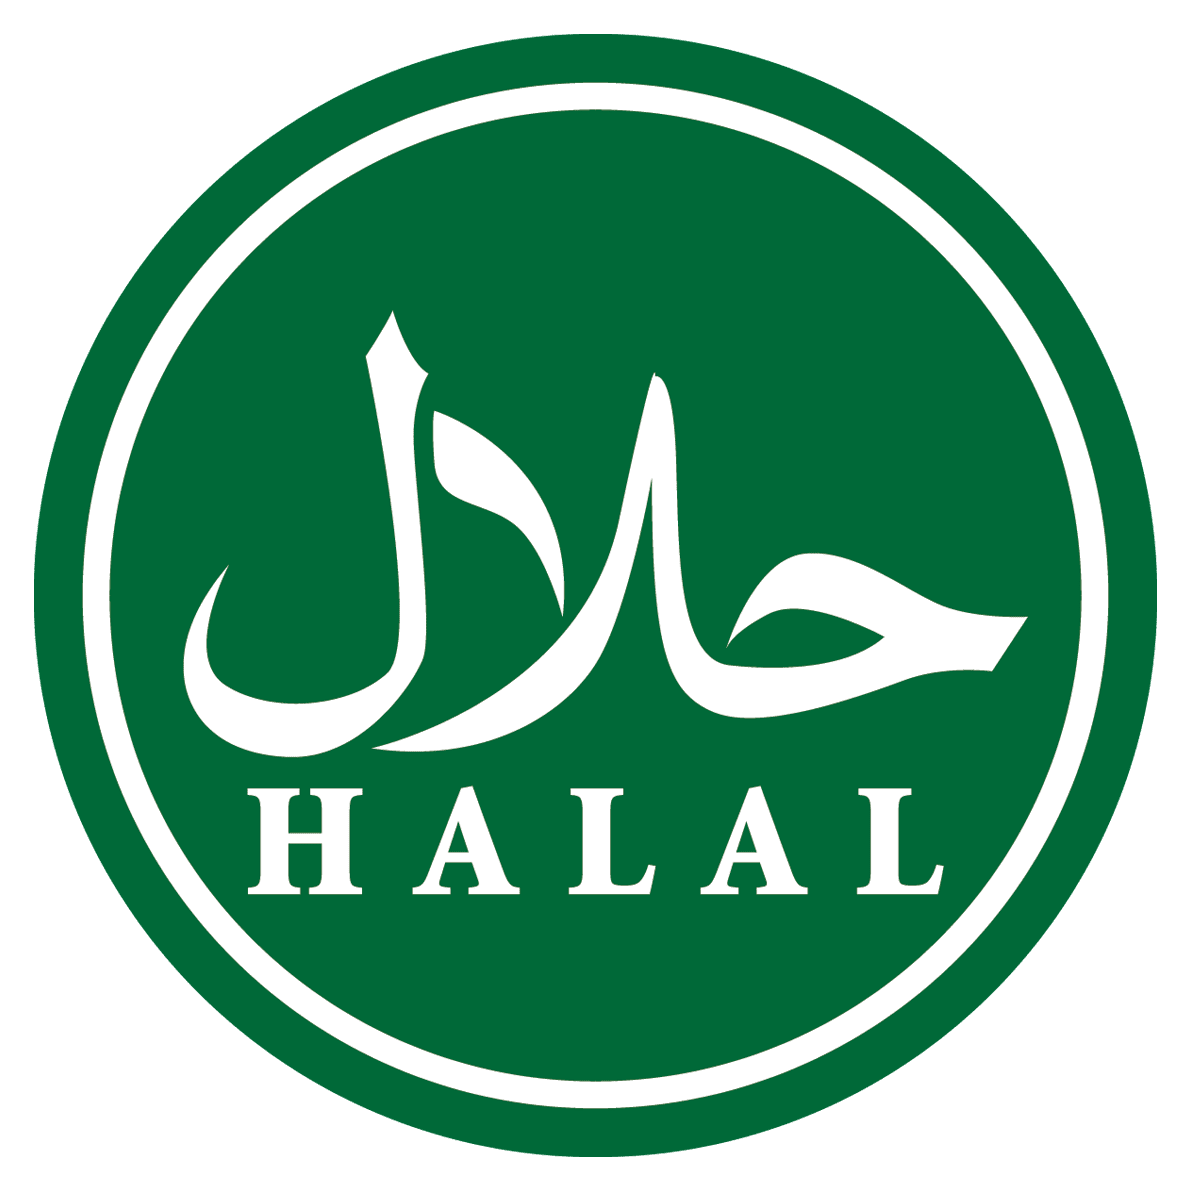 Halda Valley Halal certificate 